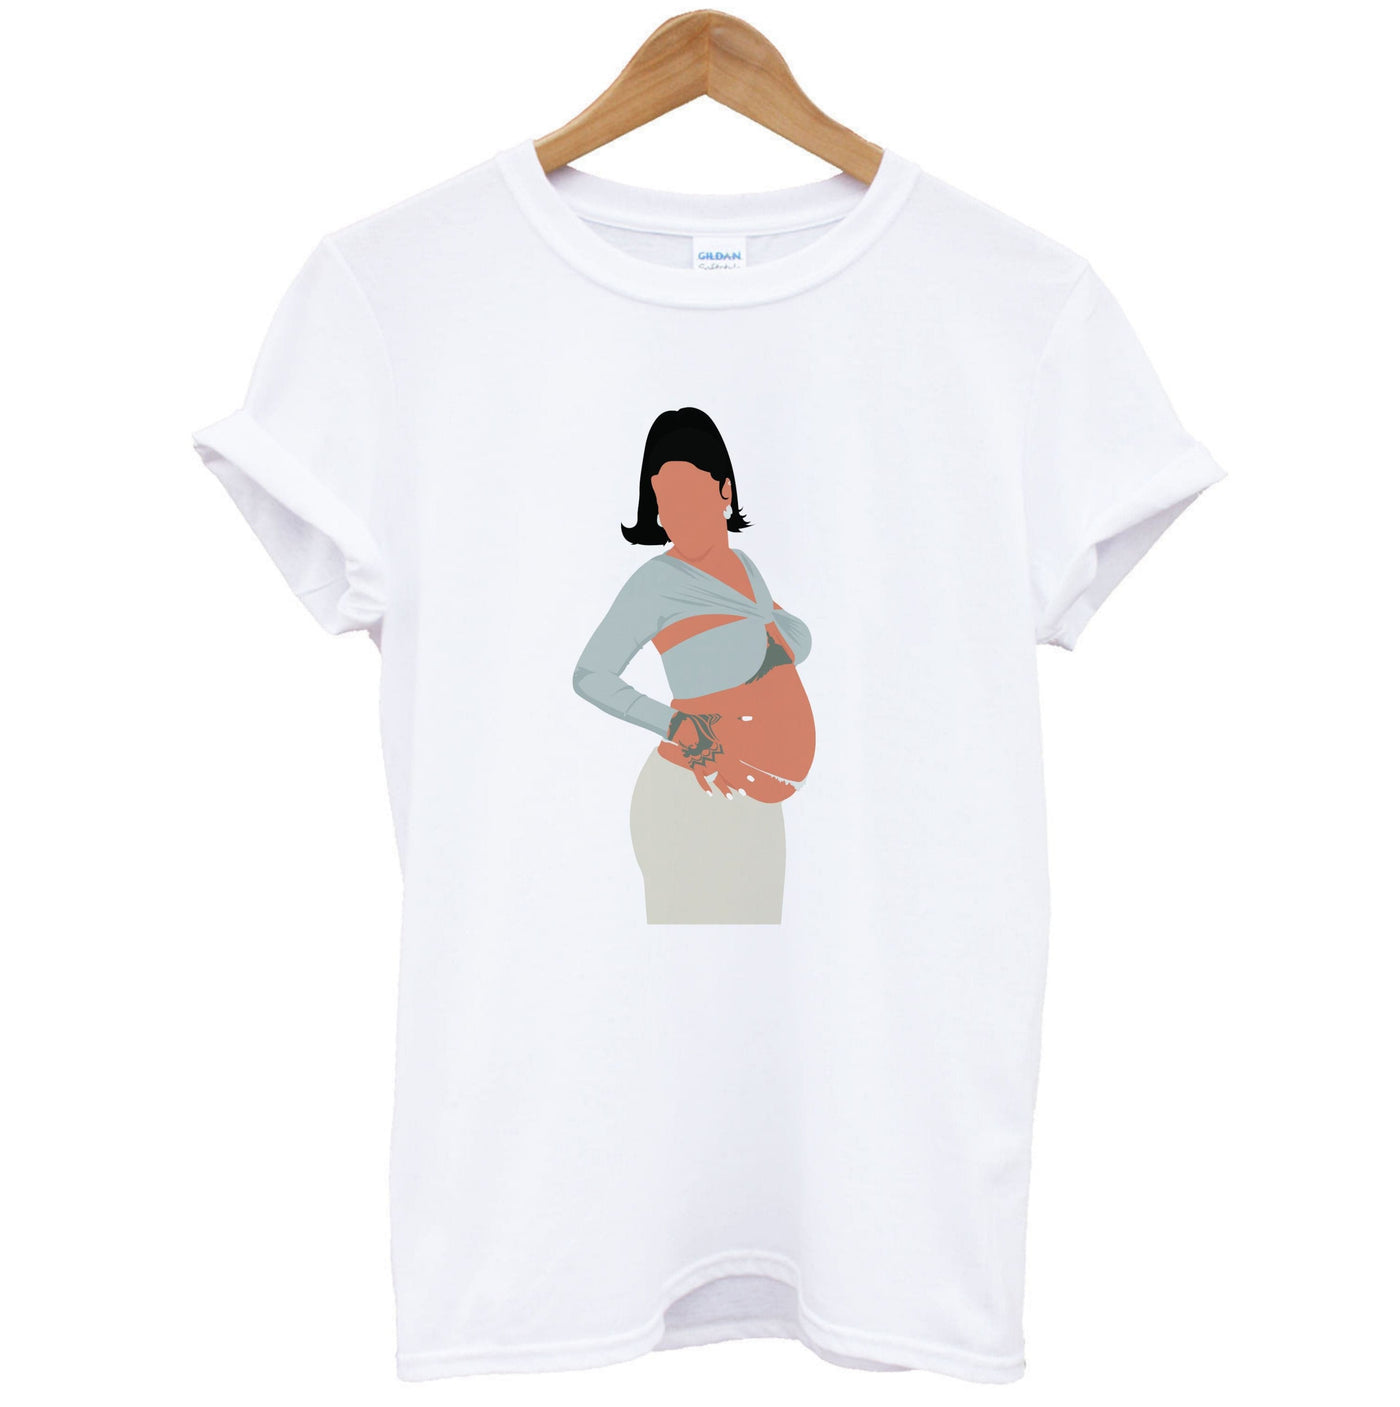 Pregnancy Announcement - Rihanna T-Shirt